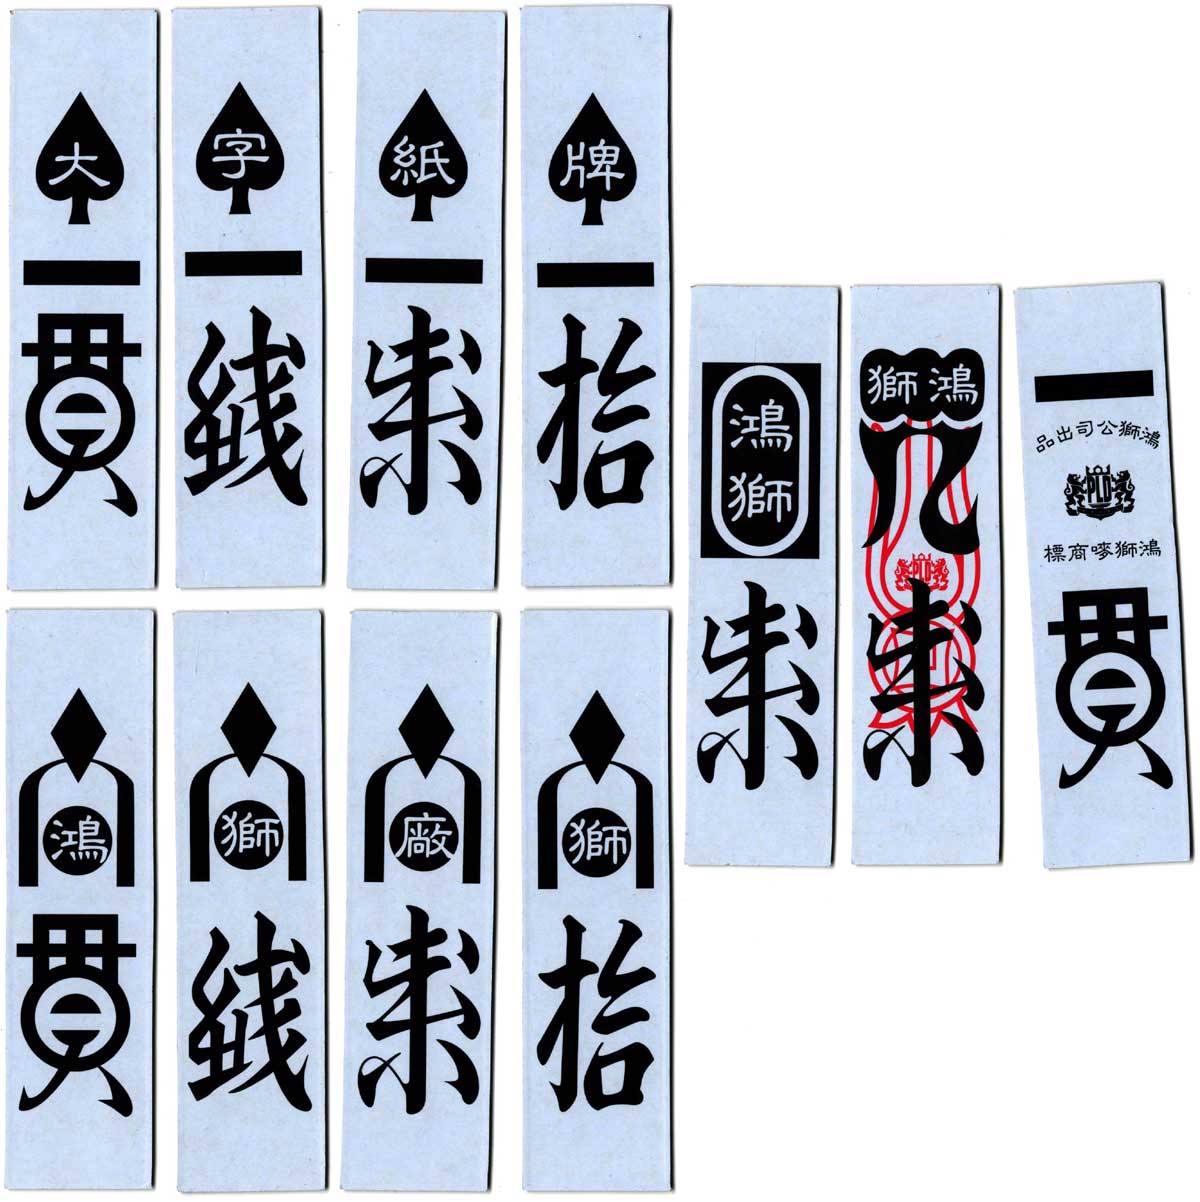 六虎牌 Six tiger cards, 鴻獅廠 Hong Shi Factory